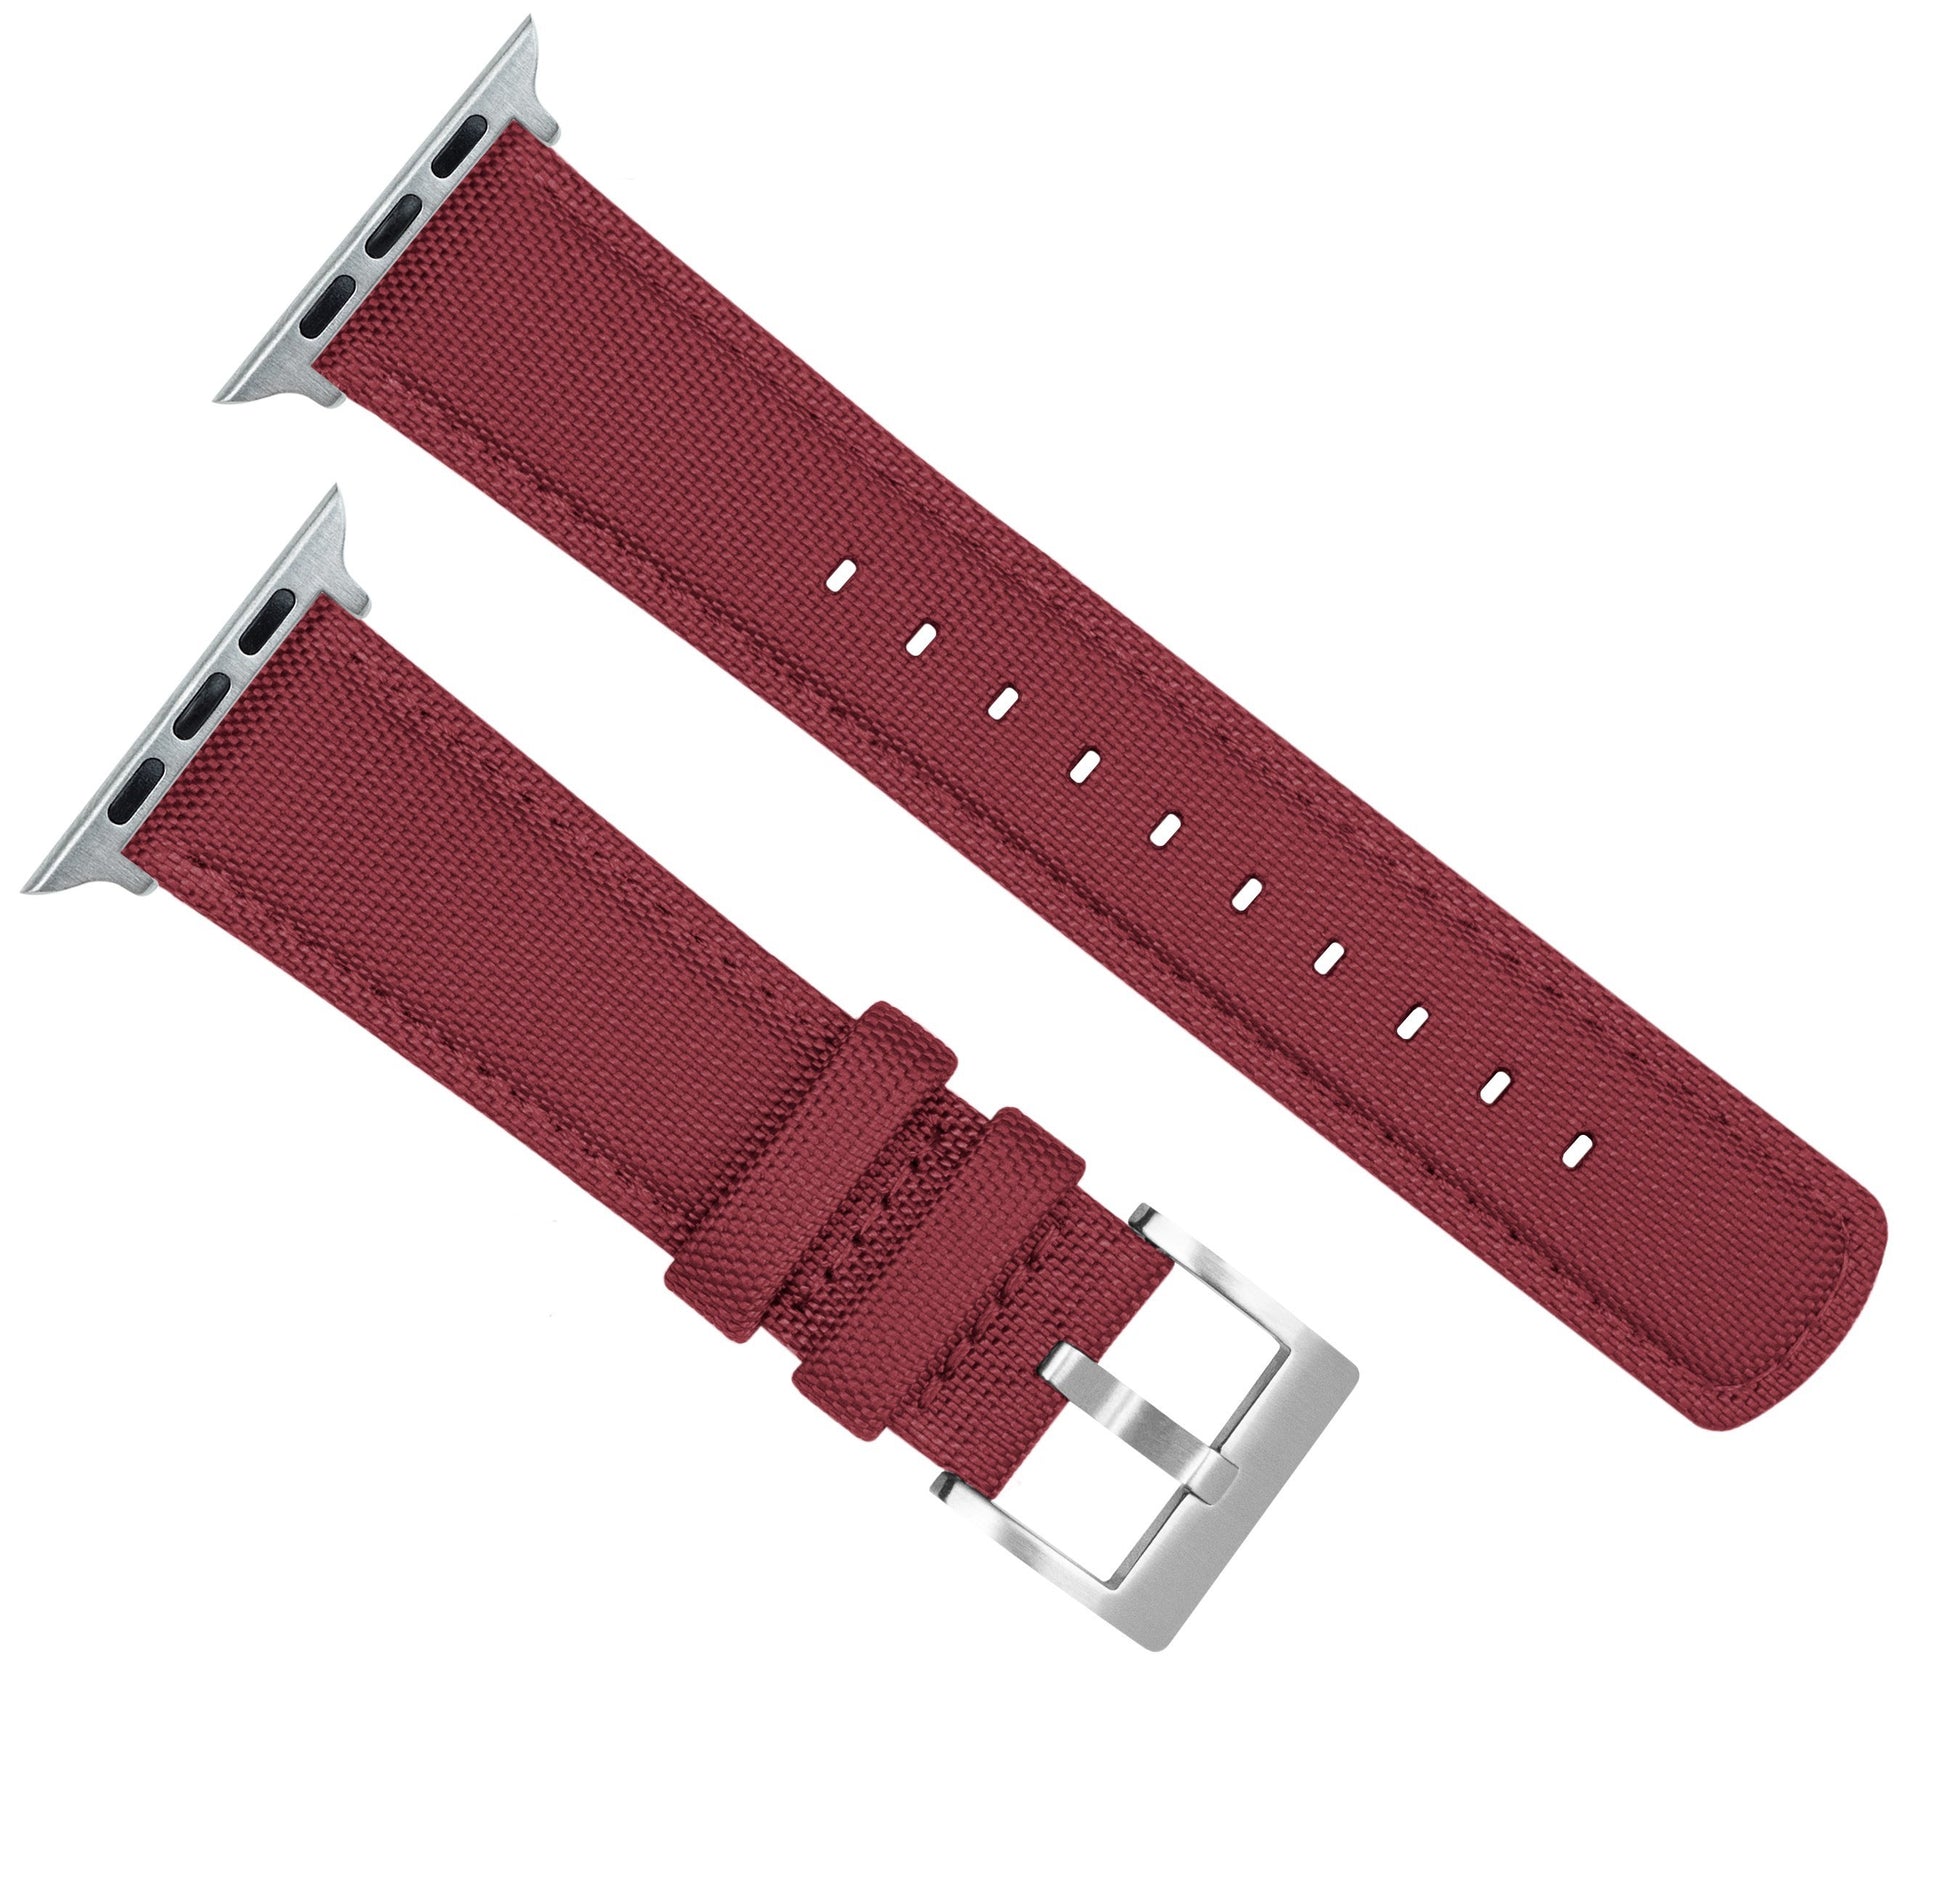 Apple Watch | Red Raspberry Sailcloth - Barton Watch Bands